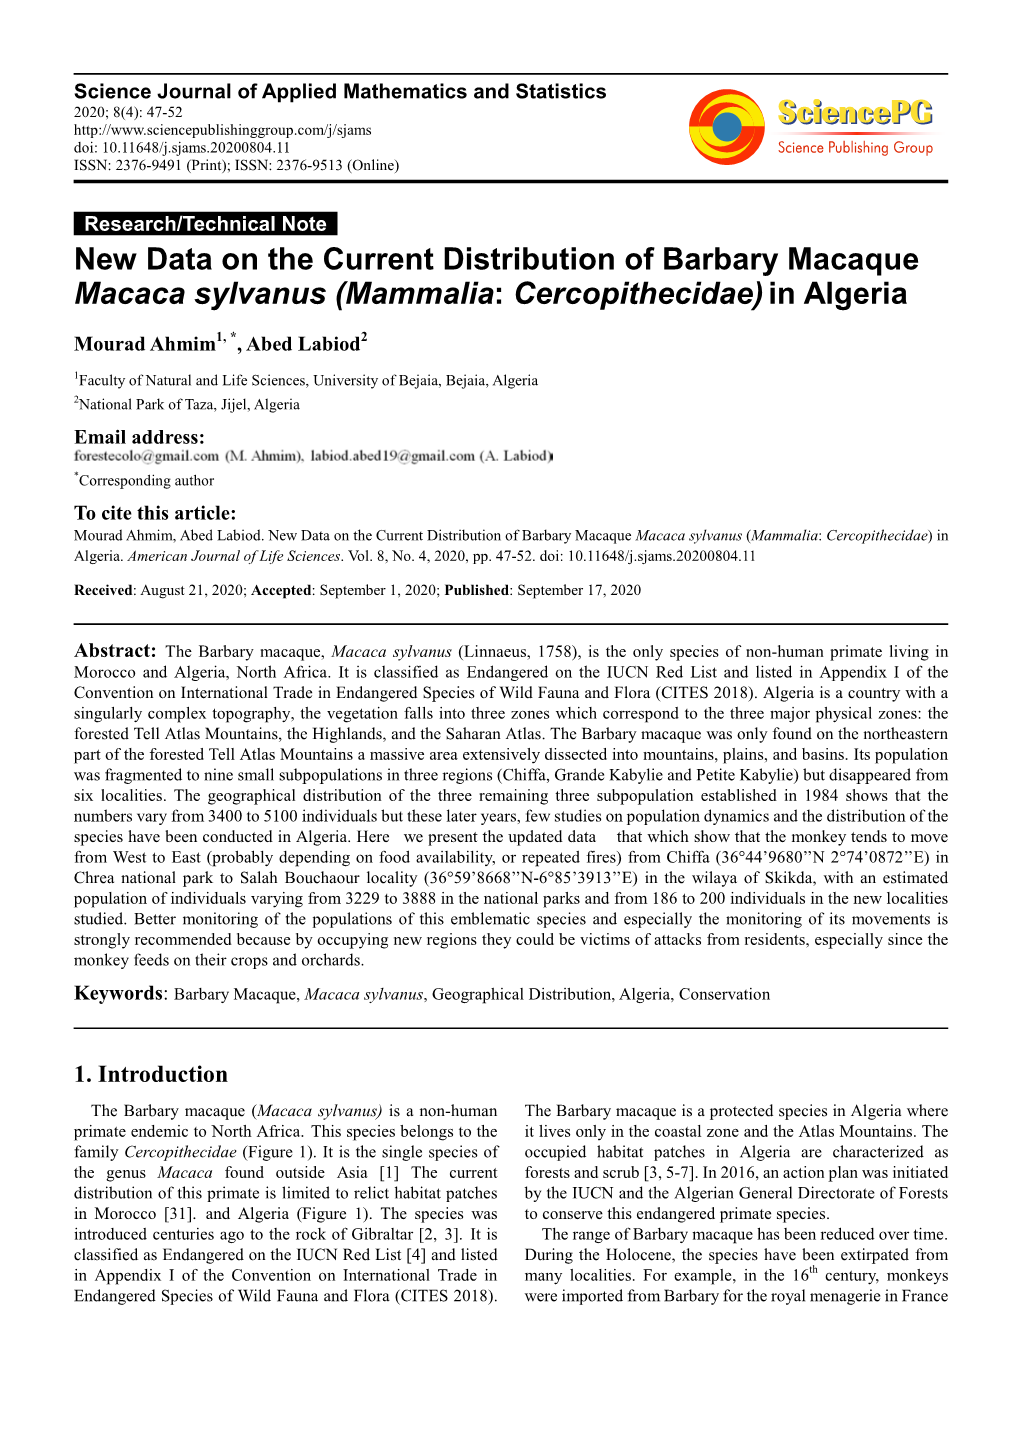 New Data on the Current Distribution of Barbary Macaque Macaca Sylvanus (Mammalia: Cercopithecidae) in Algeria